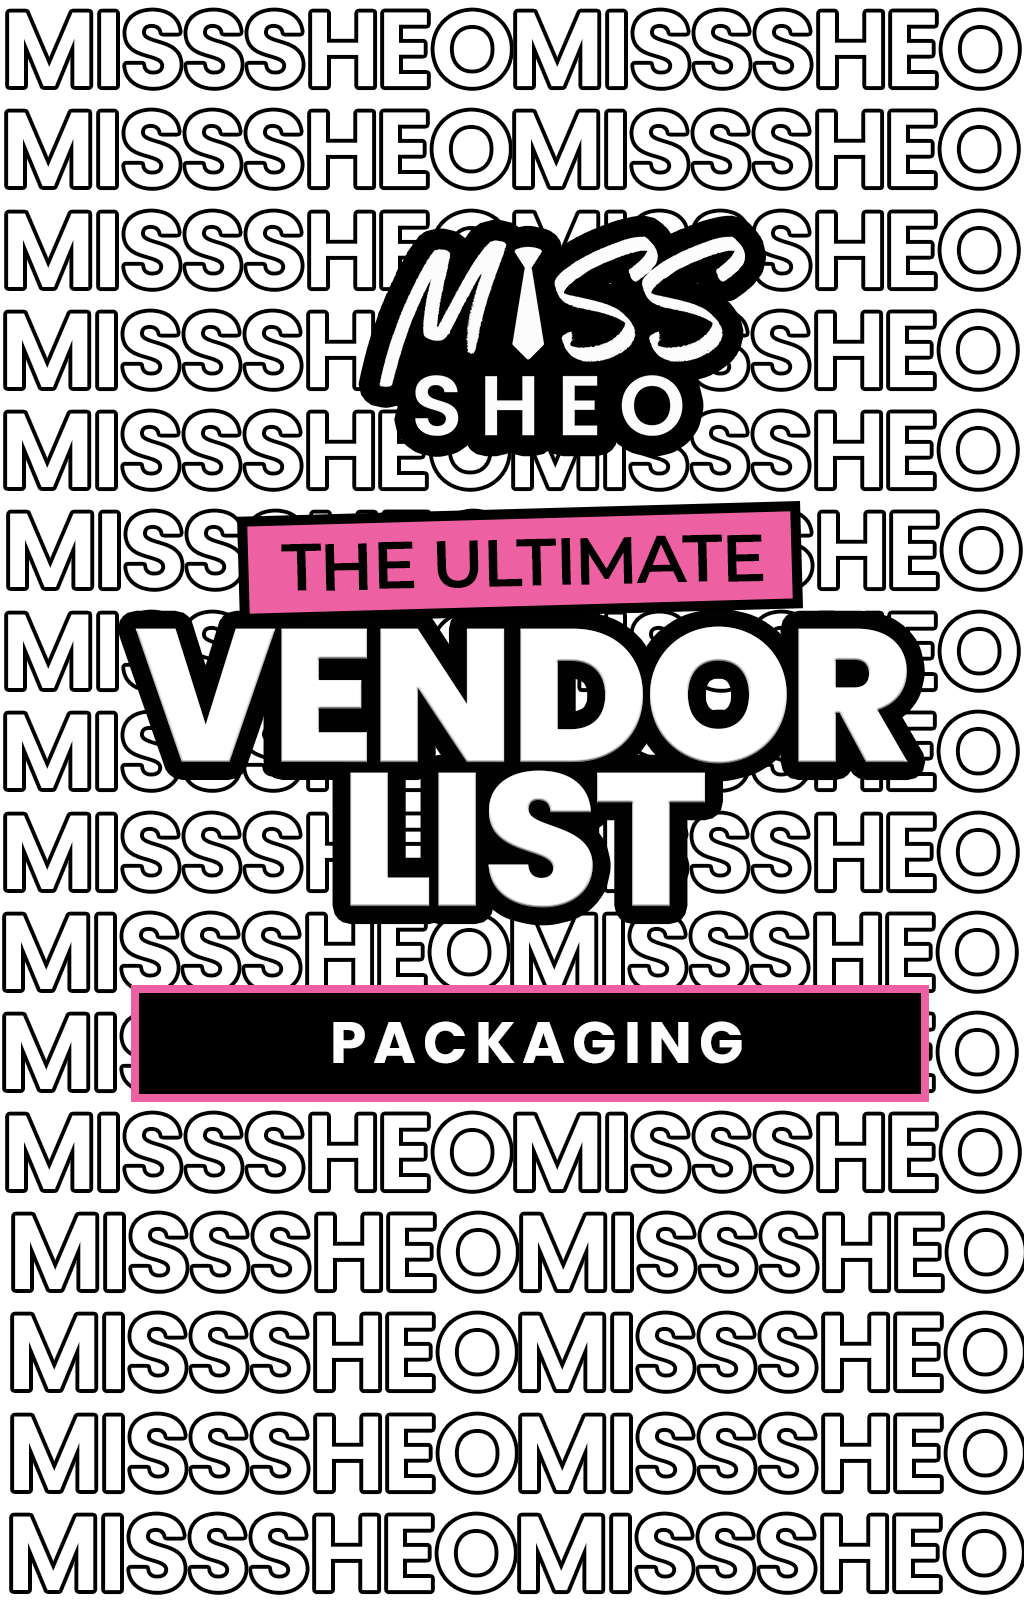 Miss Sheo Packaging Vendor List